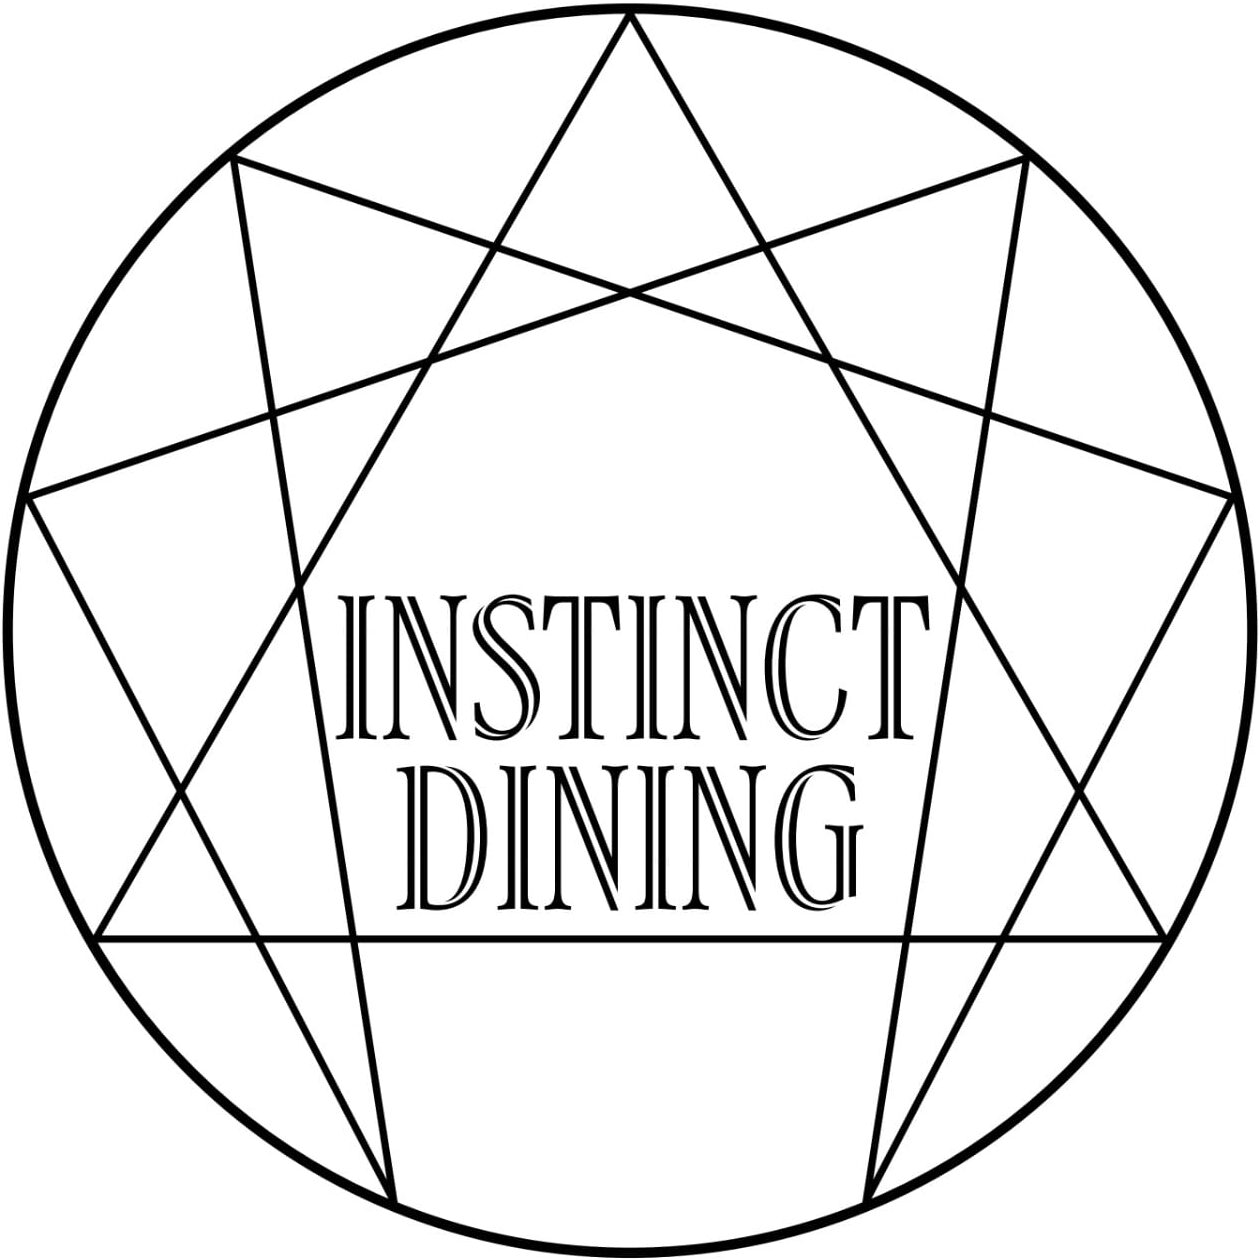 Instinct Dining logo